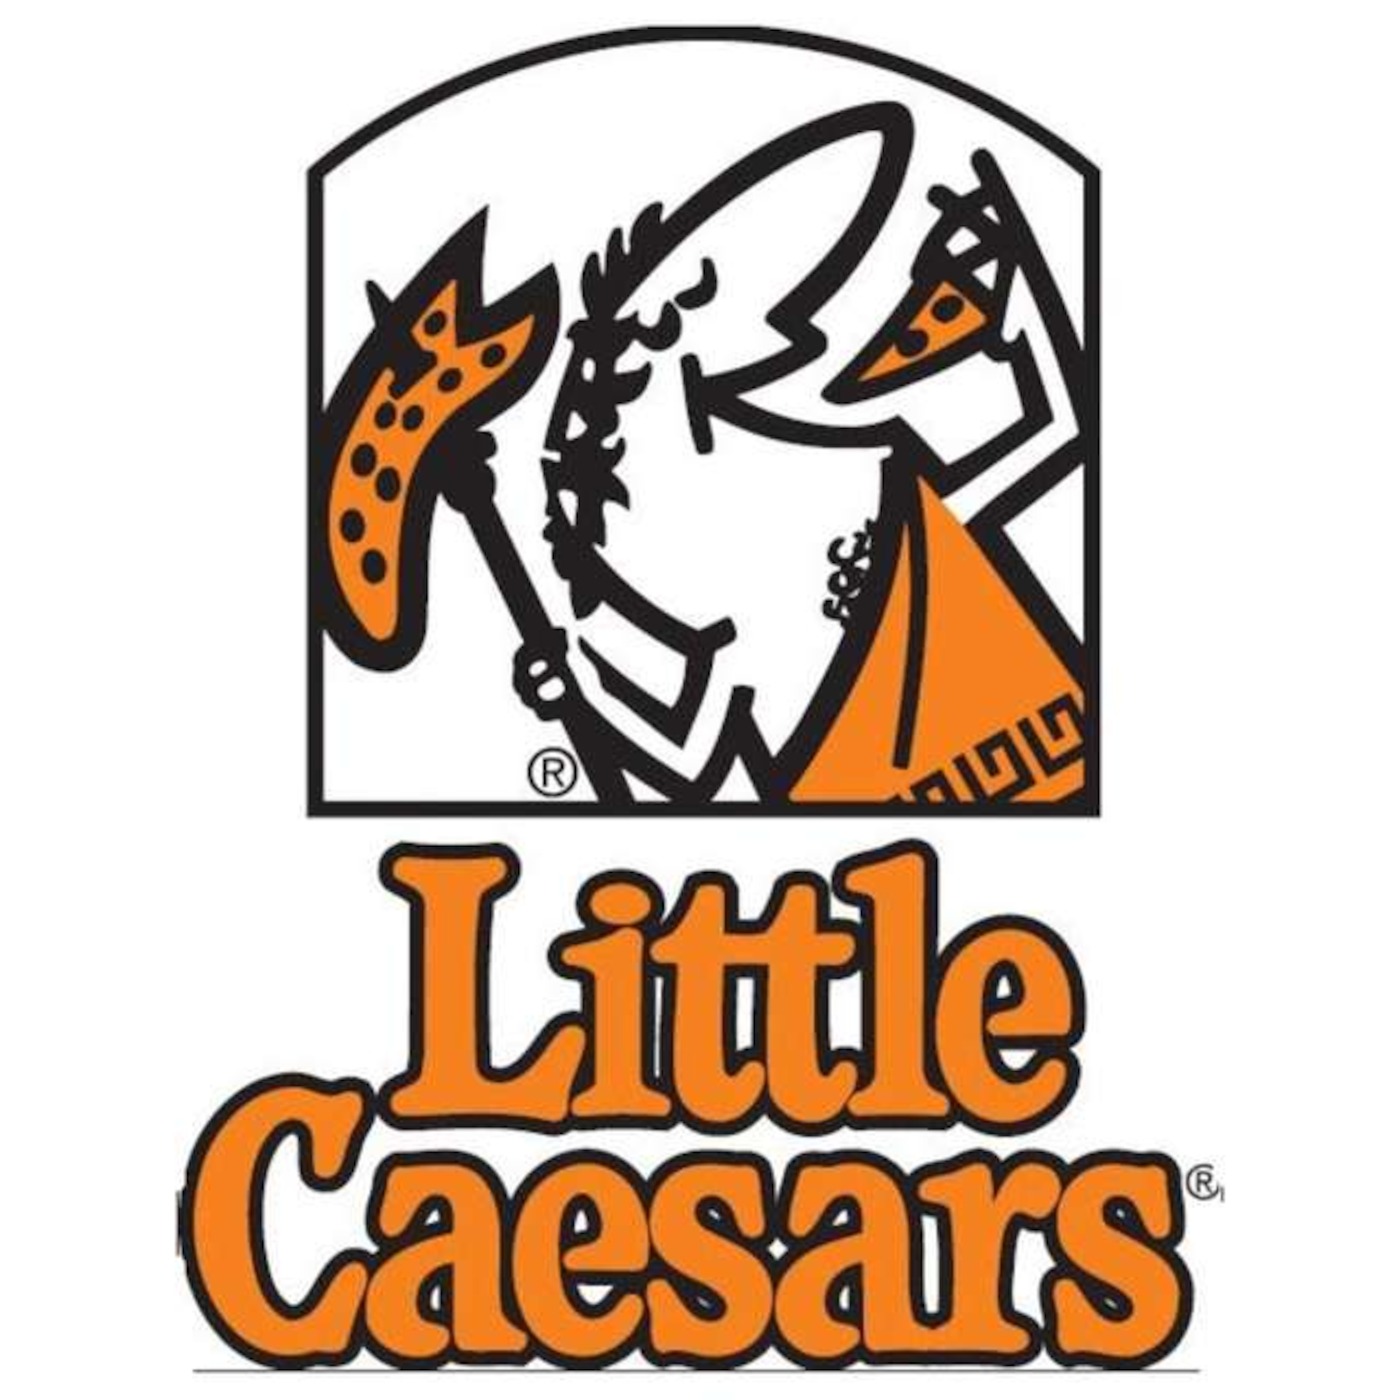 Episode 6 - Little Caesar